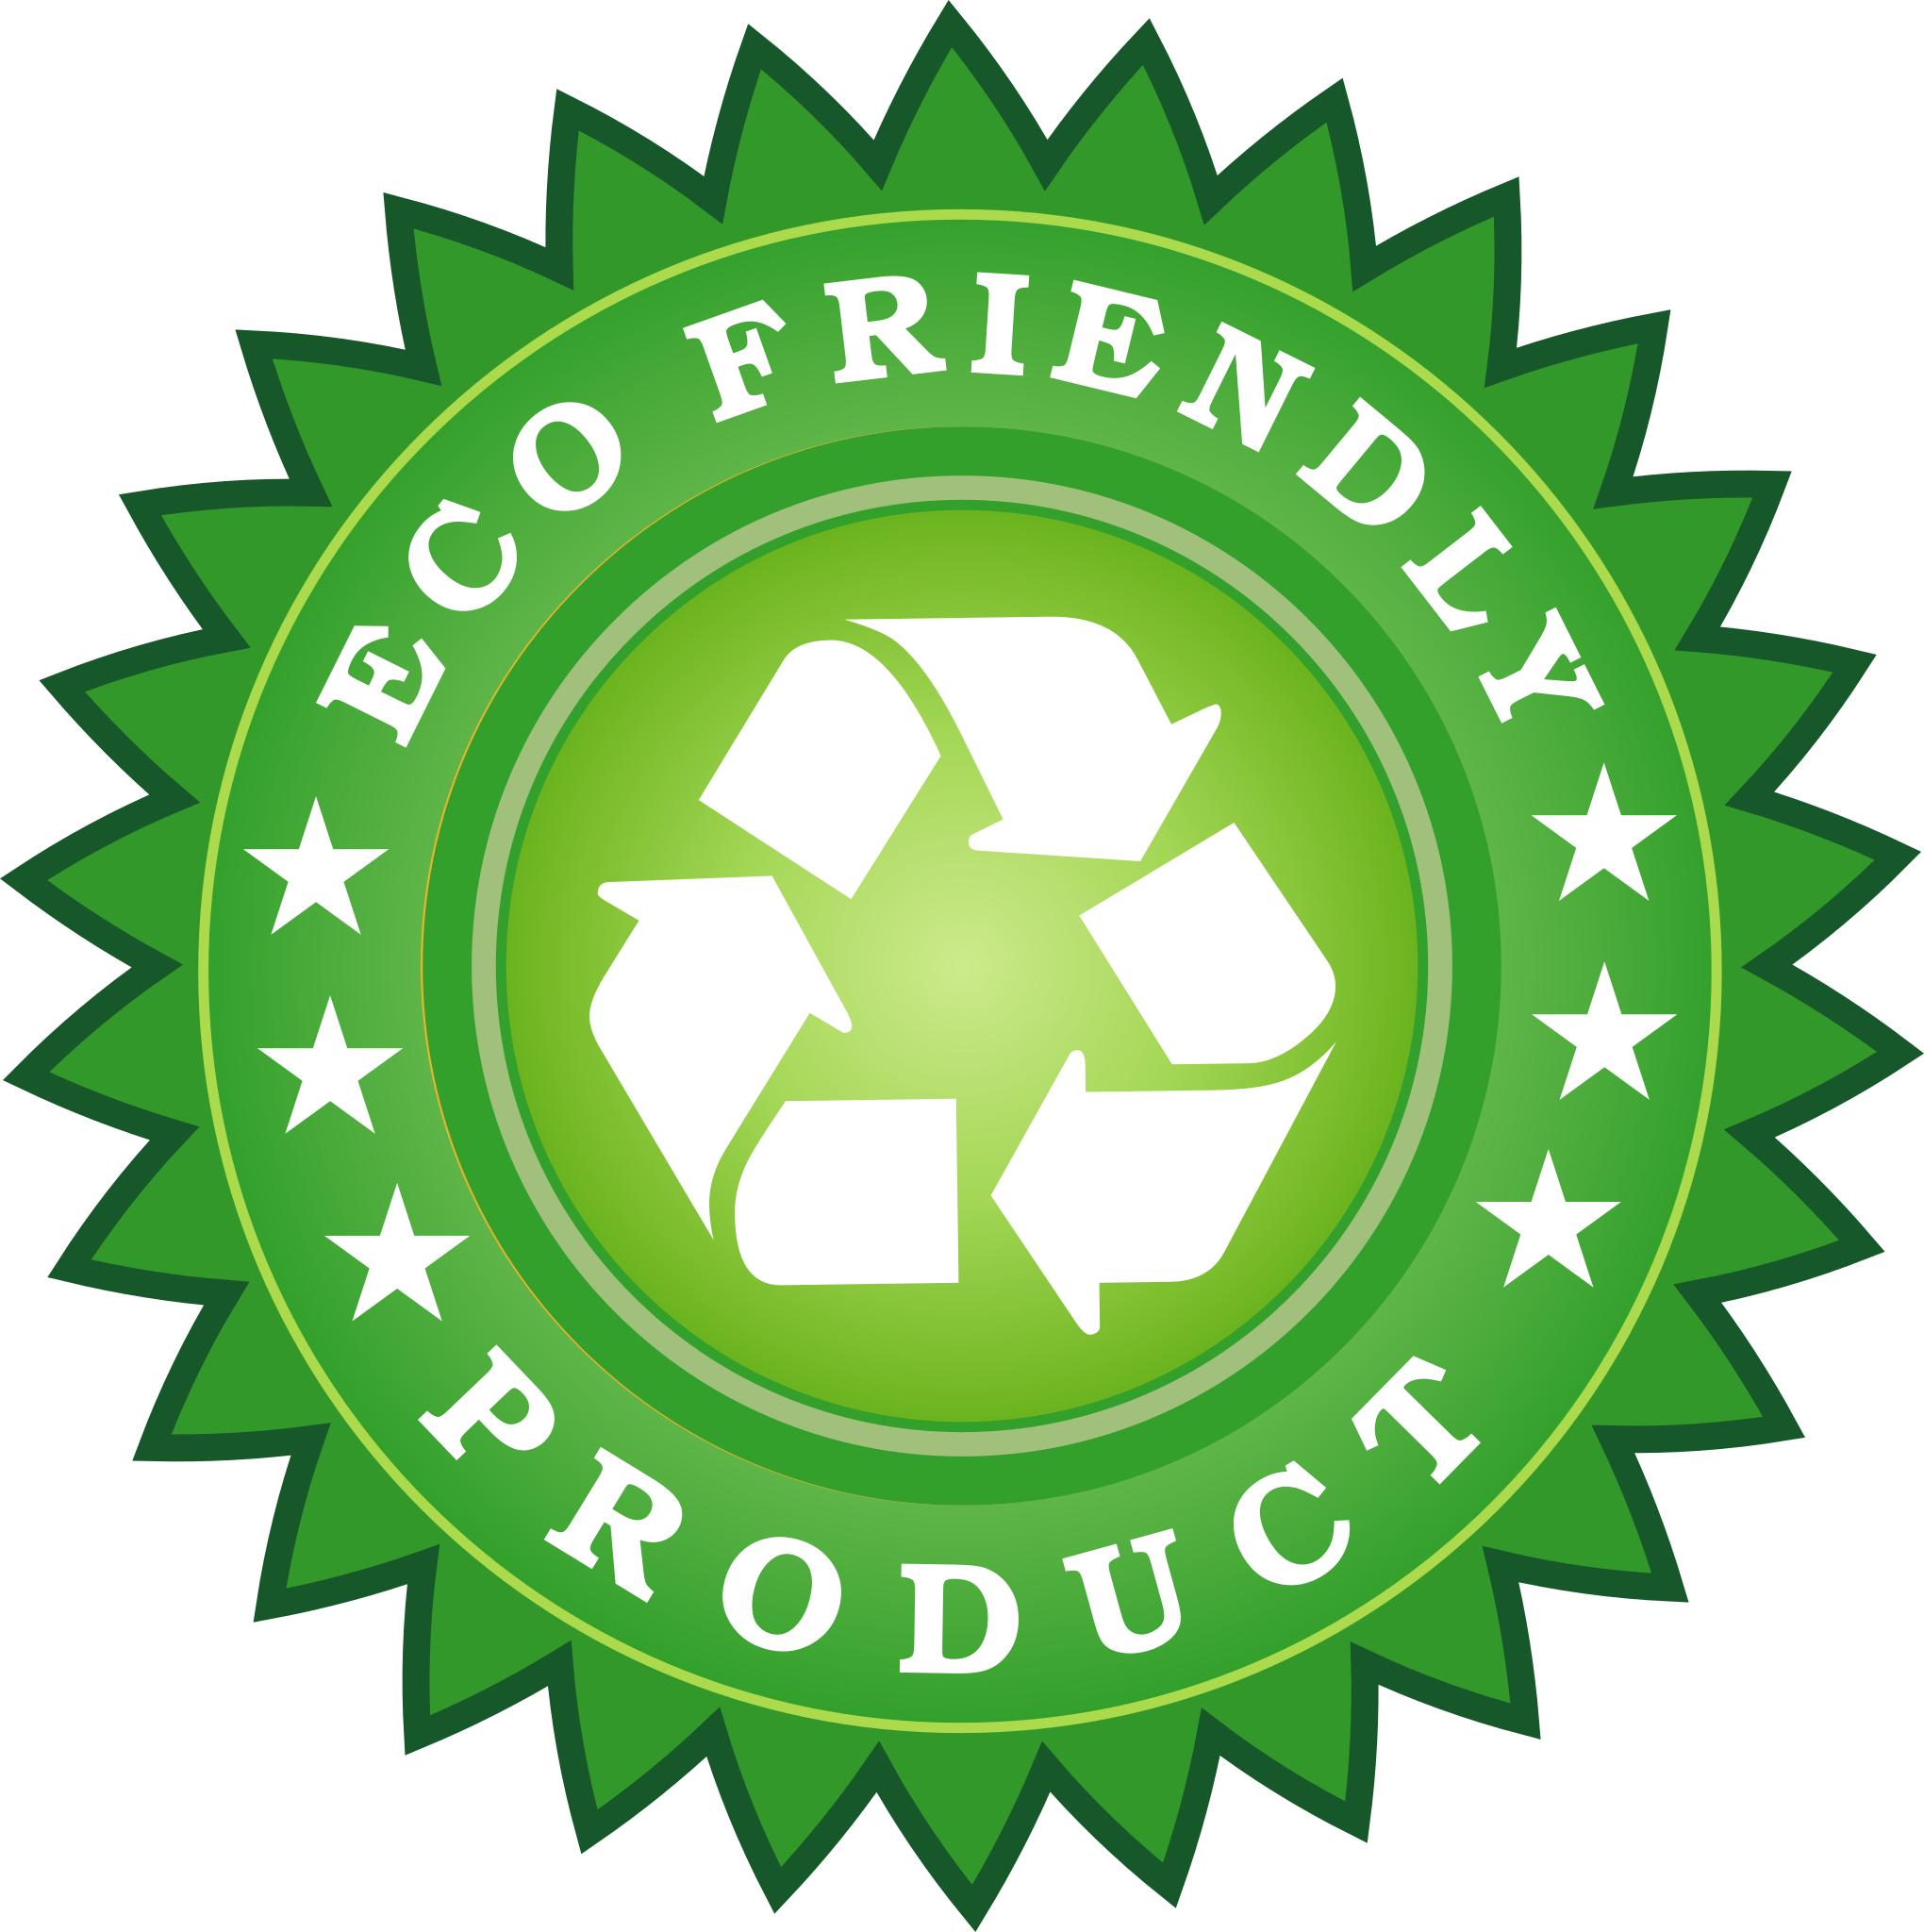 Friendly products. Экологически чистая продукция знак. Значок экологически чистого продукта. Значок эко. Знак экологически чистый продукт.